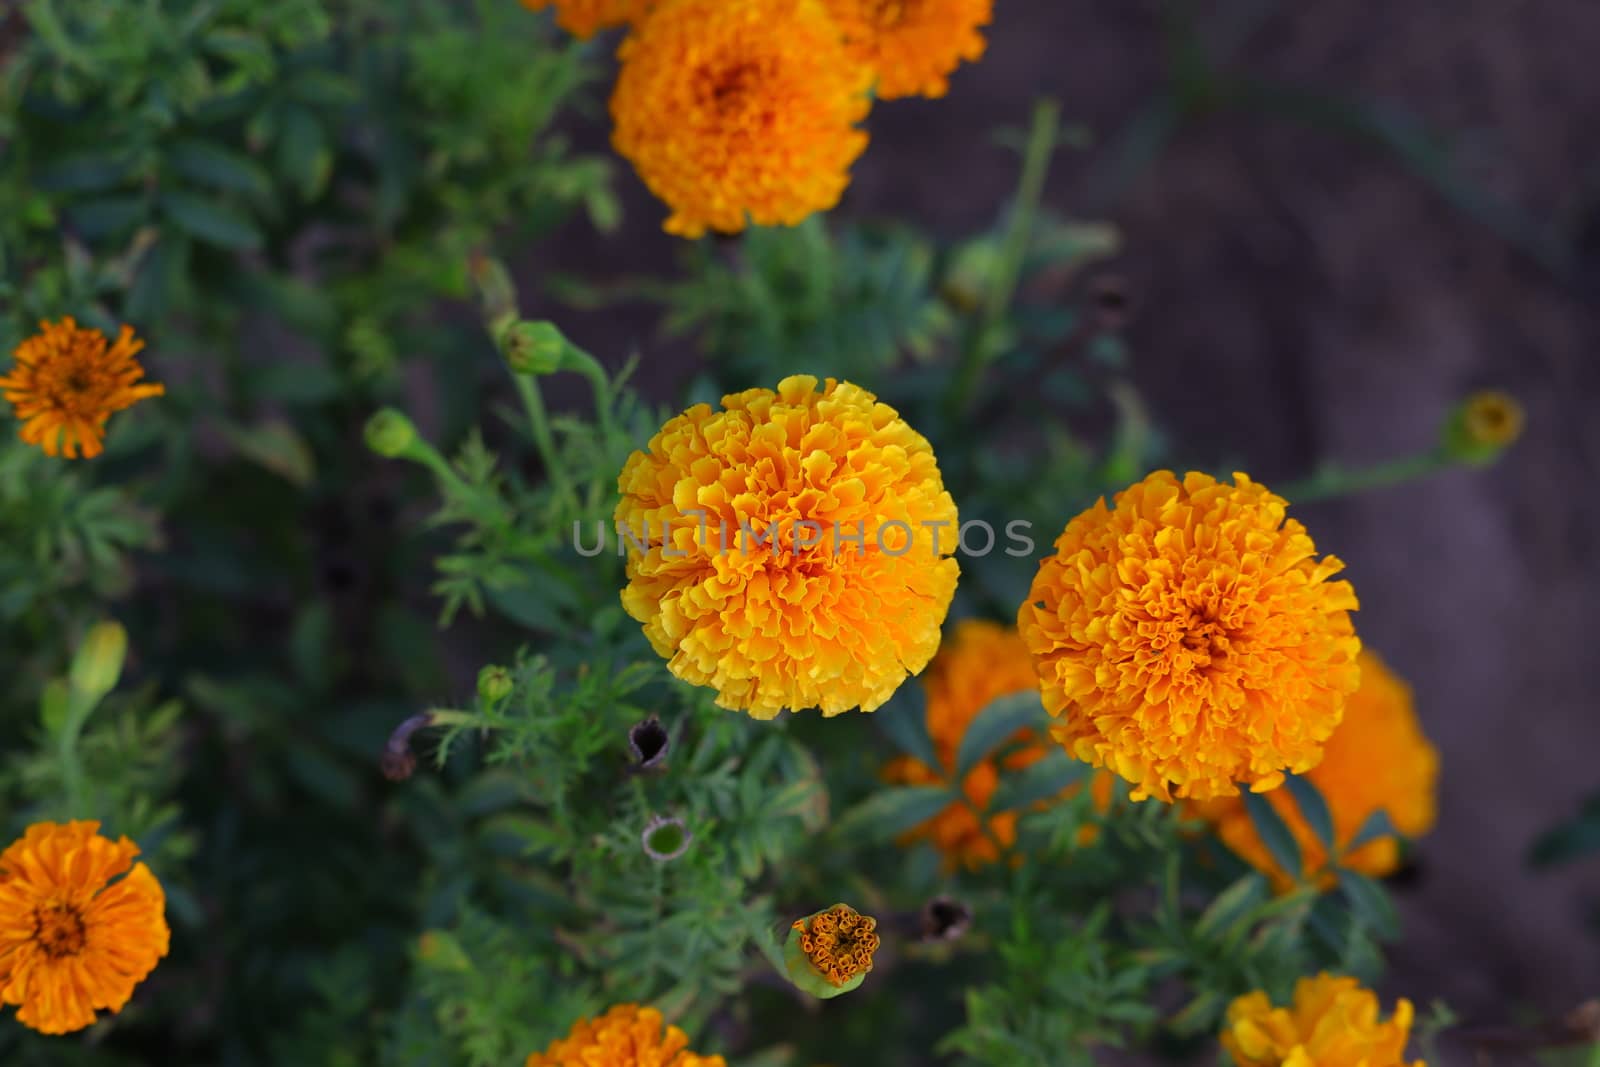 marigold flower photo, hd by 9500102400